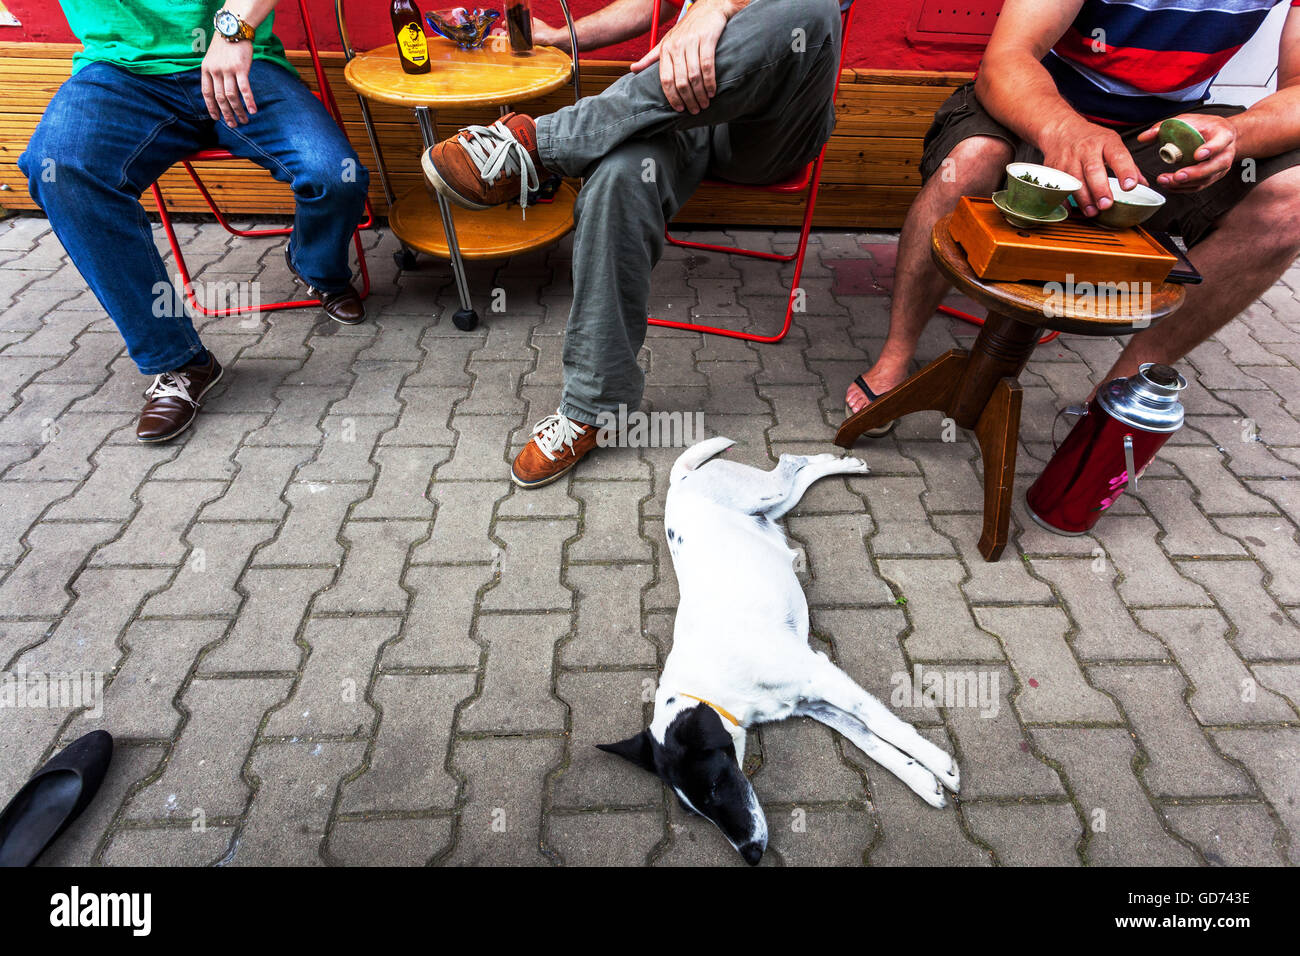 Siesta people outside a bar on the street, Decin, Czech Republic daily life Stock Photo